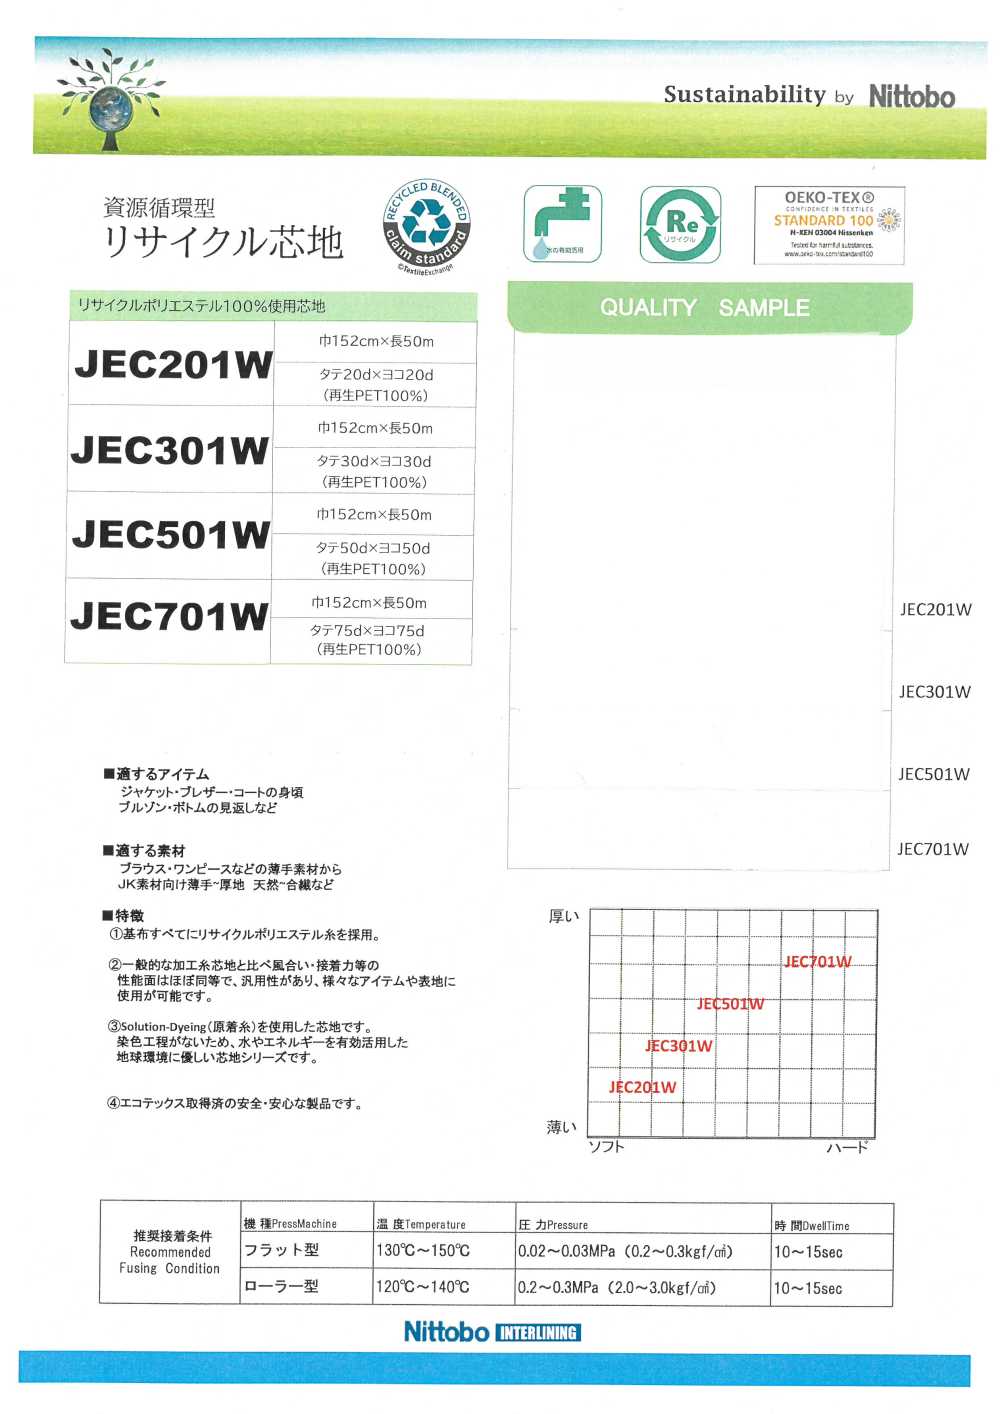 JEC701W 薄型多功能柔软衬布 75D 使用再生材料 日东纺绩